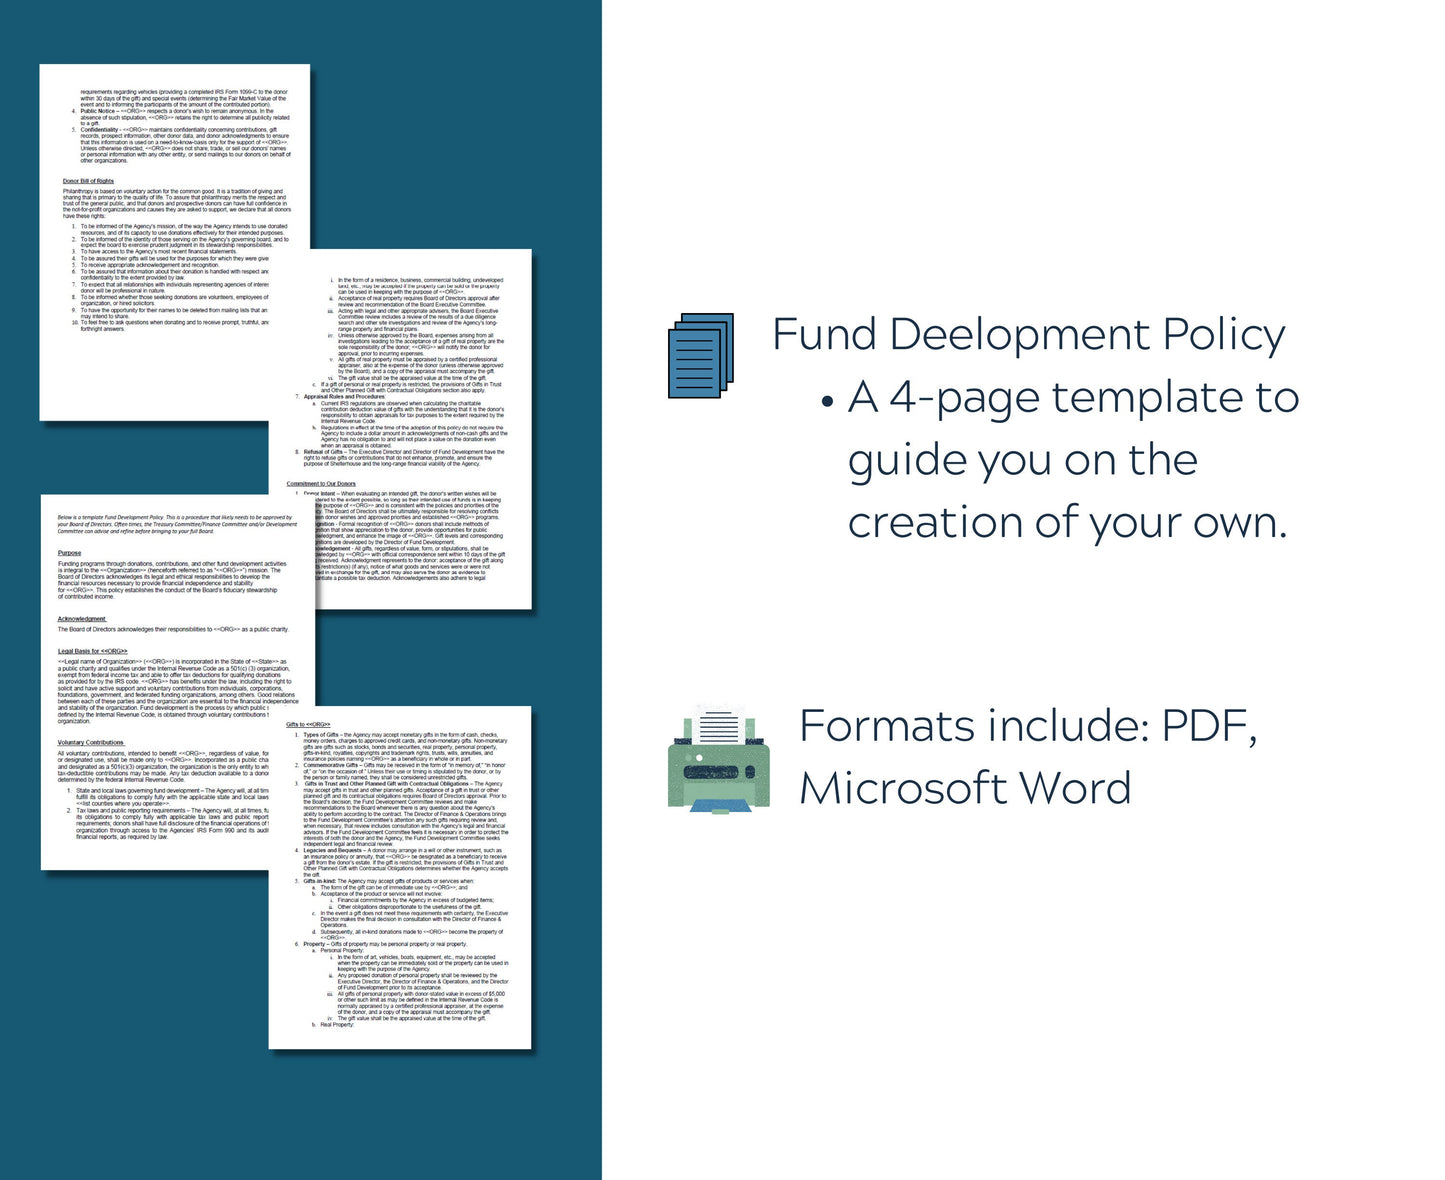 Fund Development Policy Template